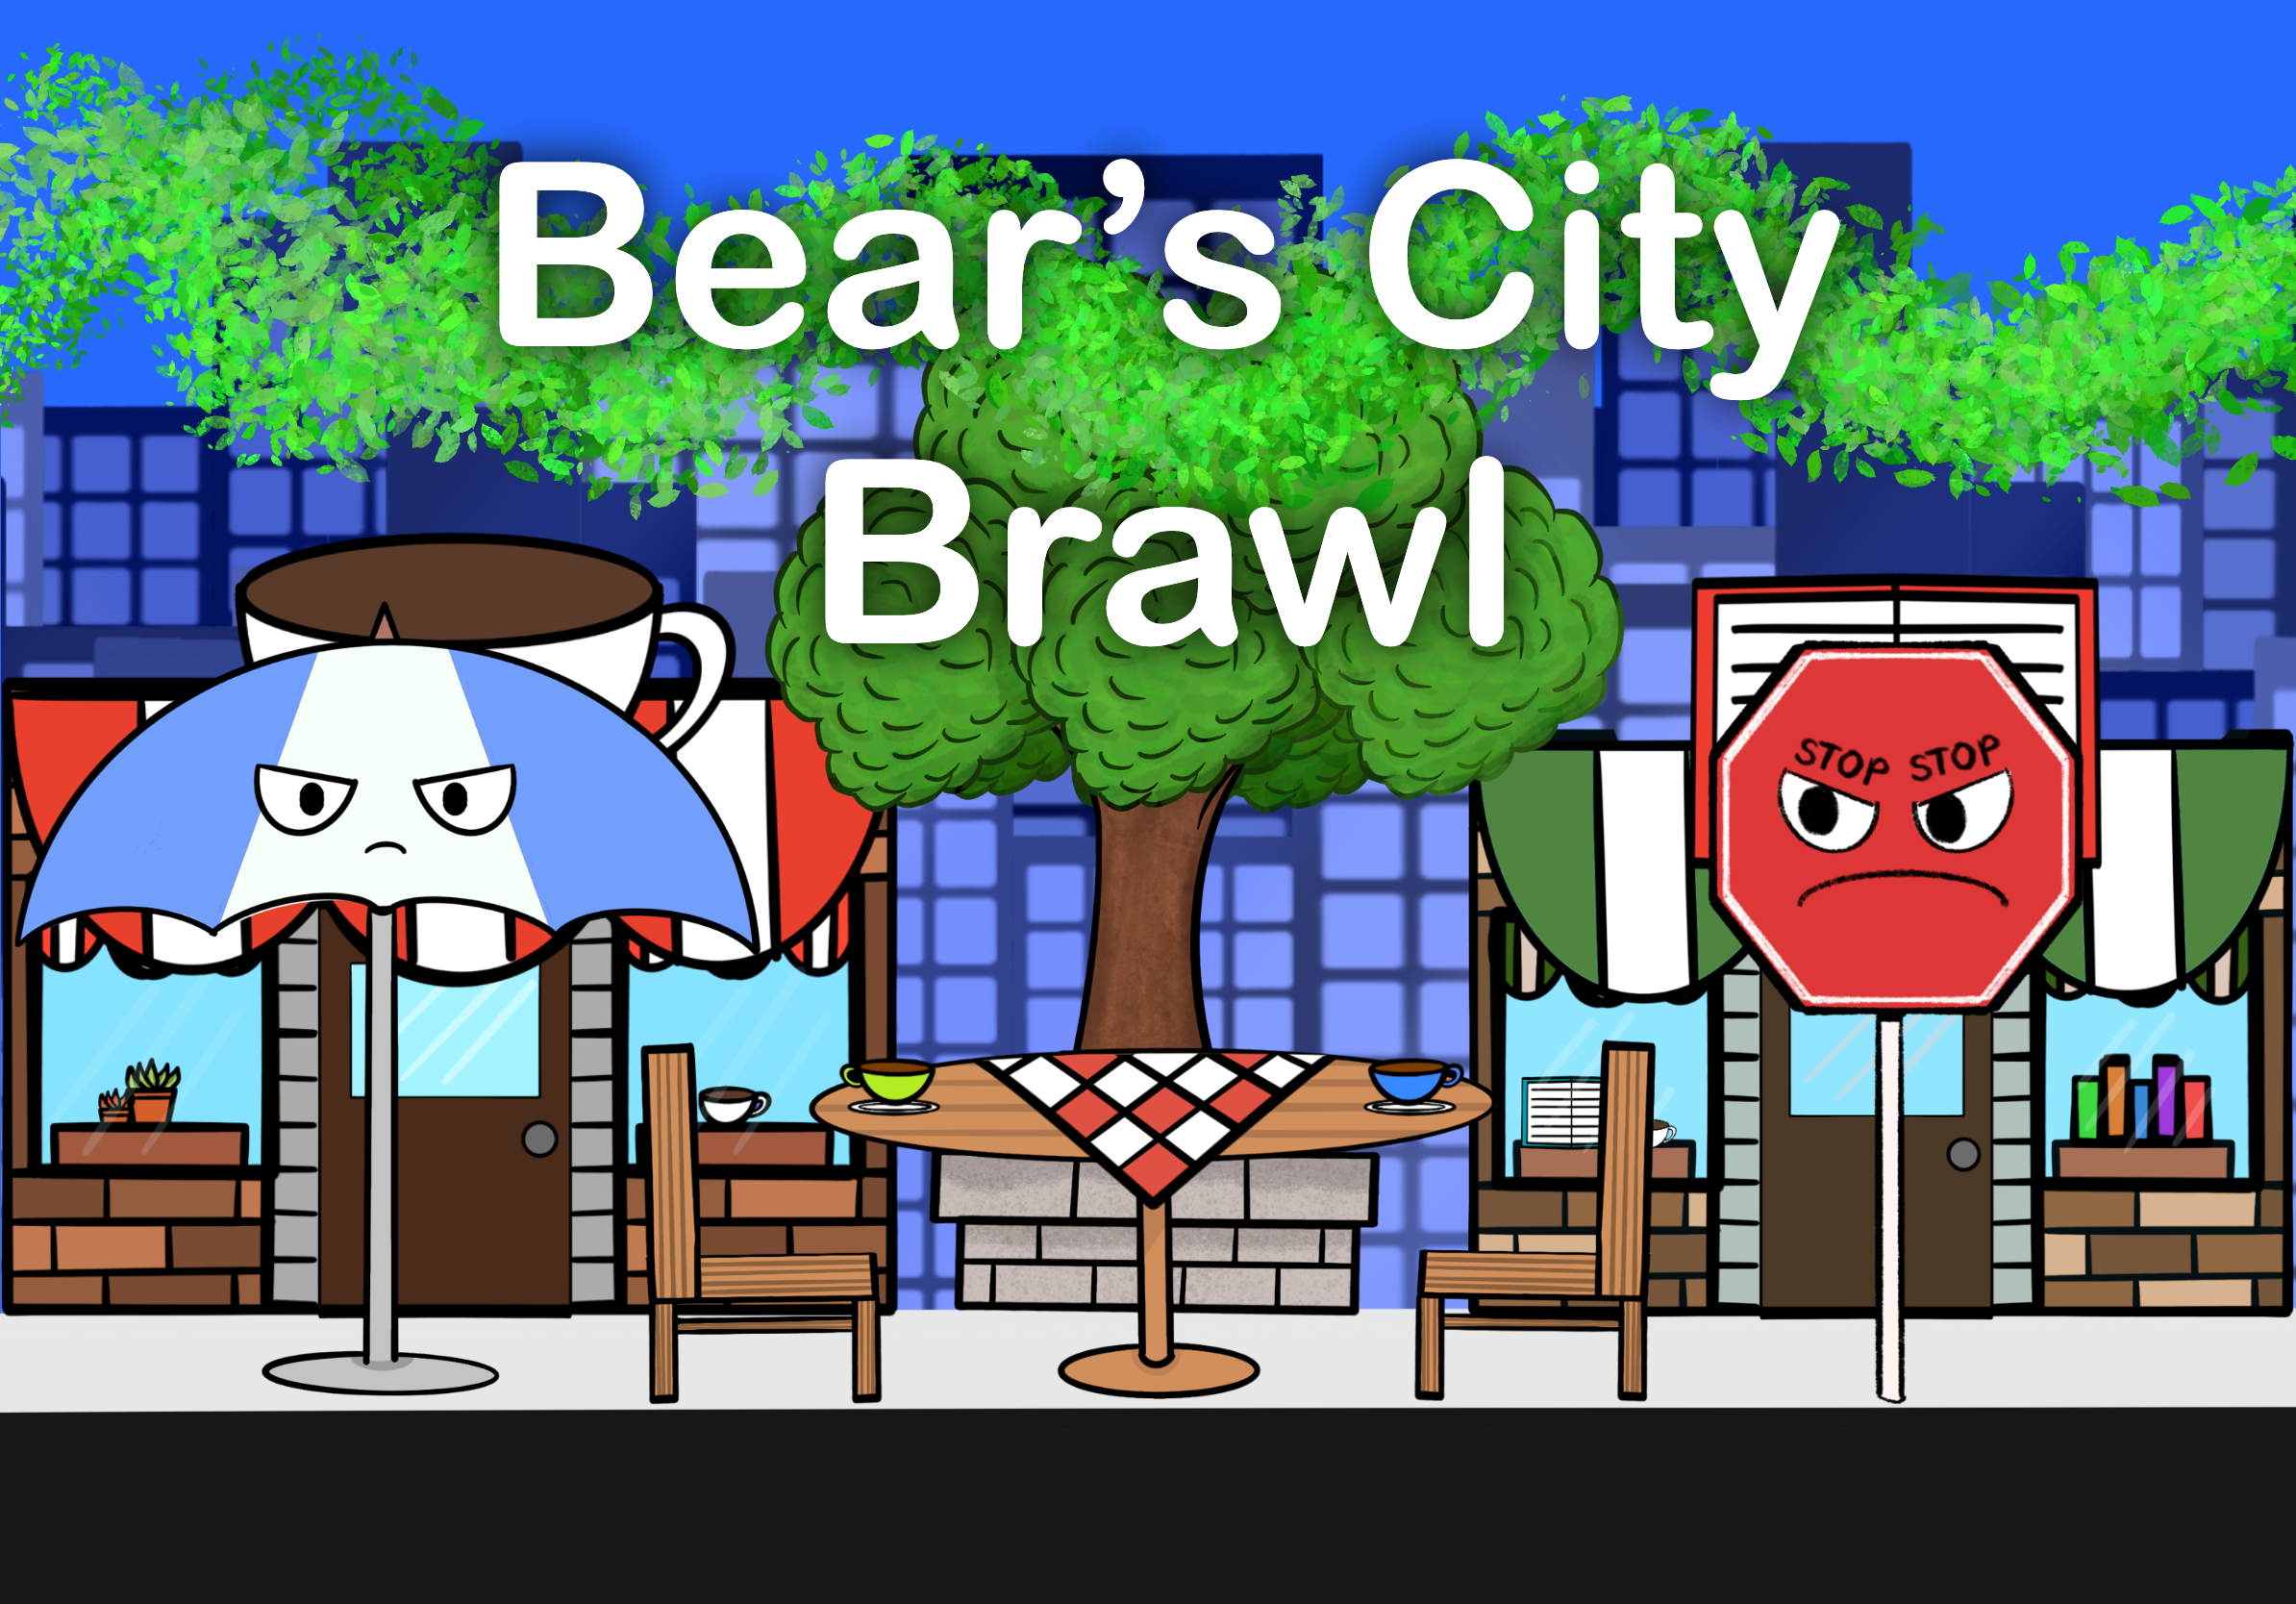 Bear's City Brawl